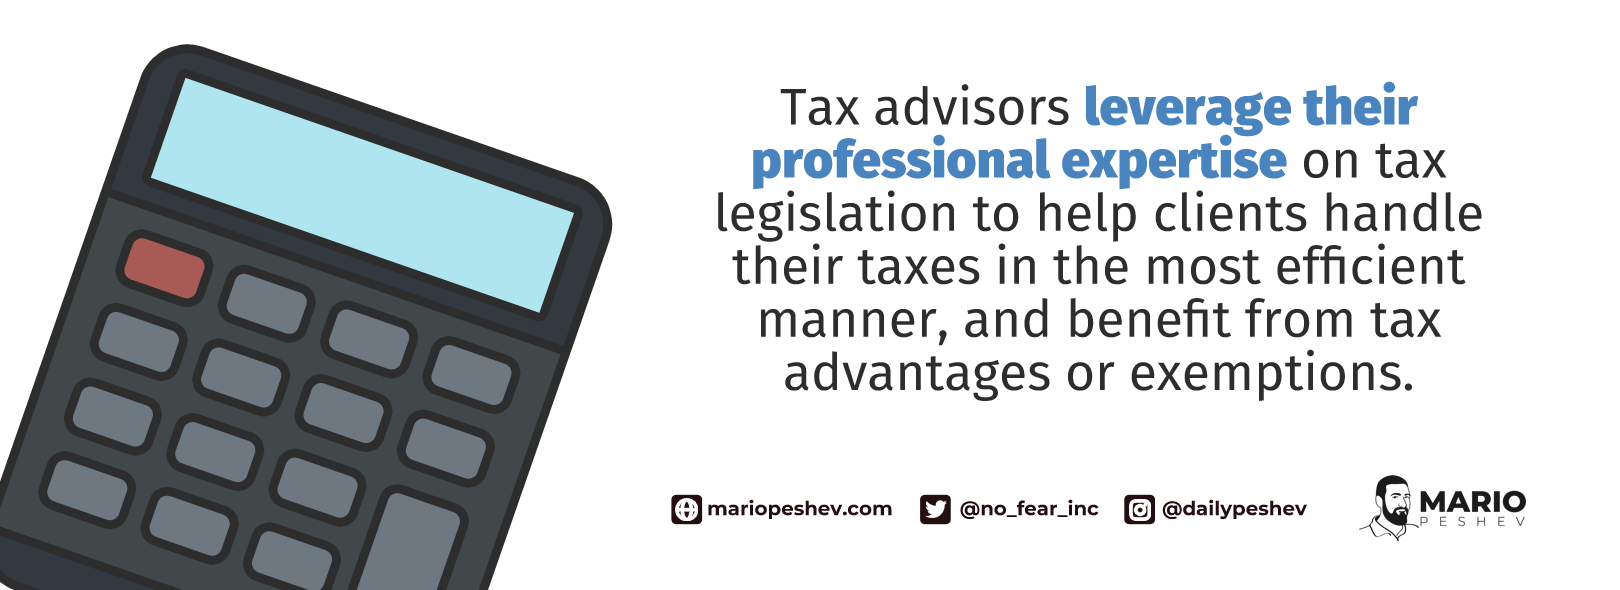 tax advisor